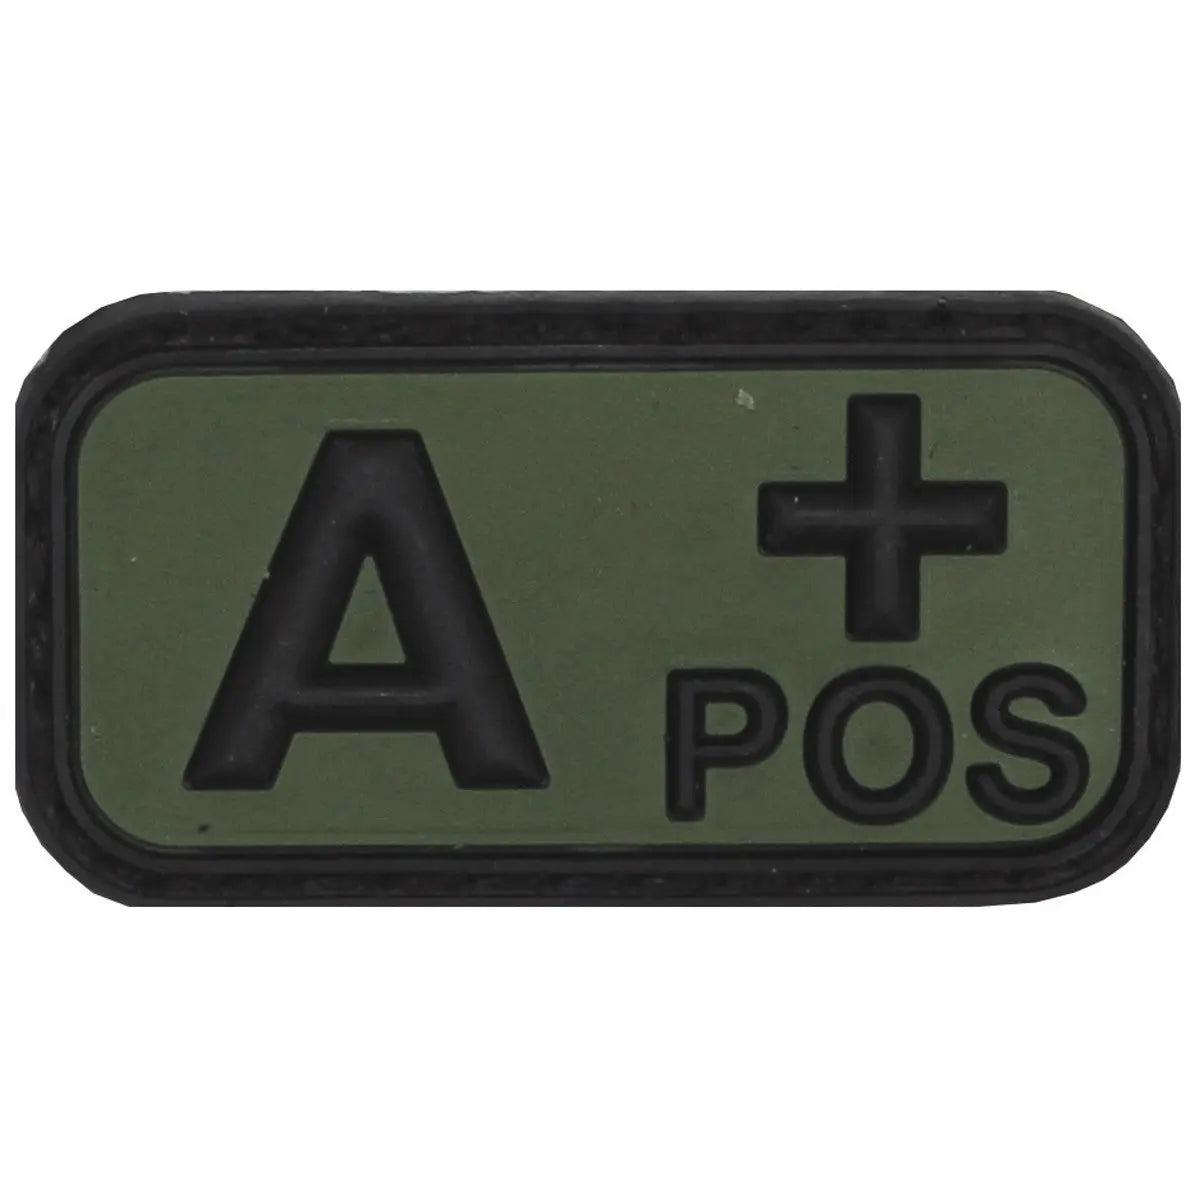 Velcro Patch, black-OD green, blood group "A POS", 3D